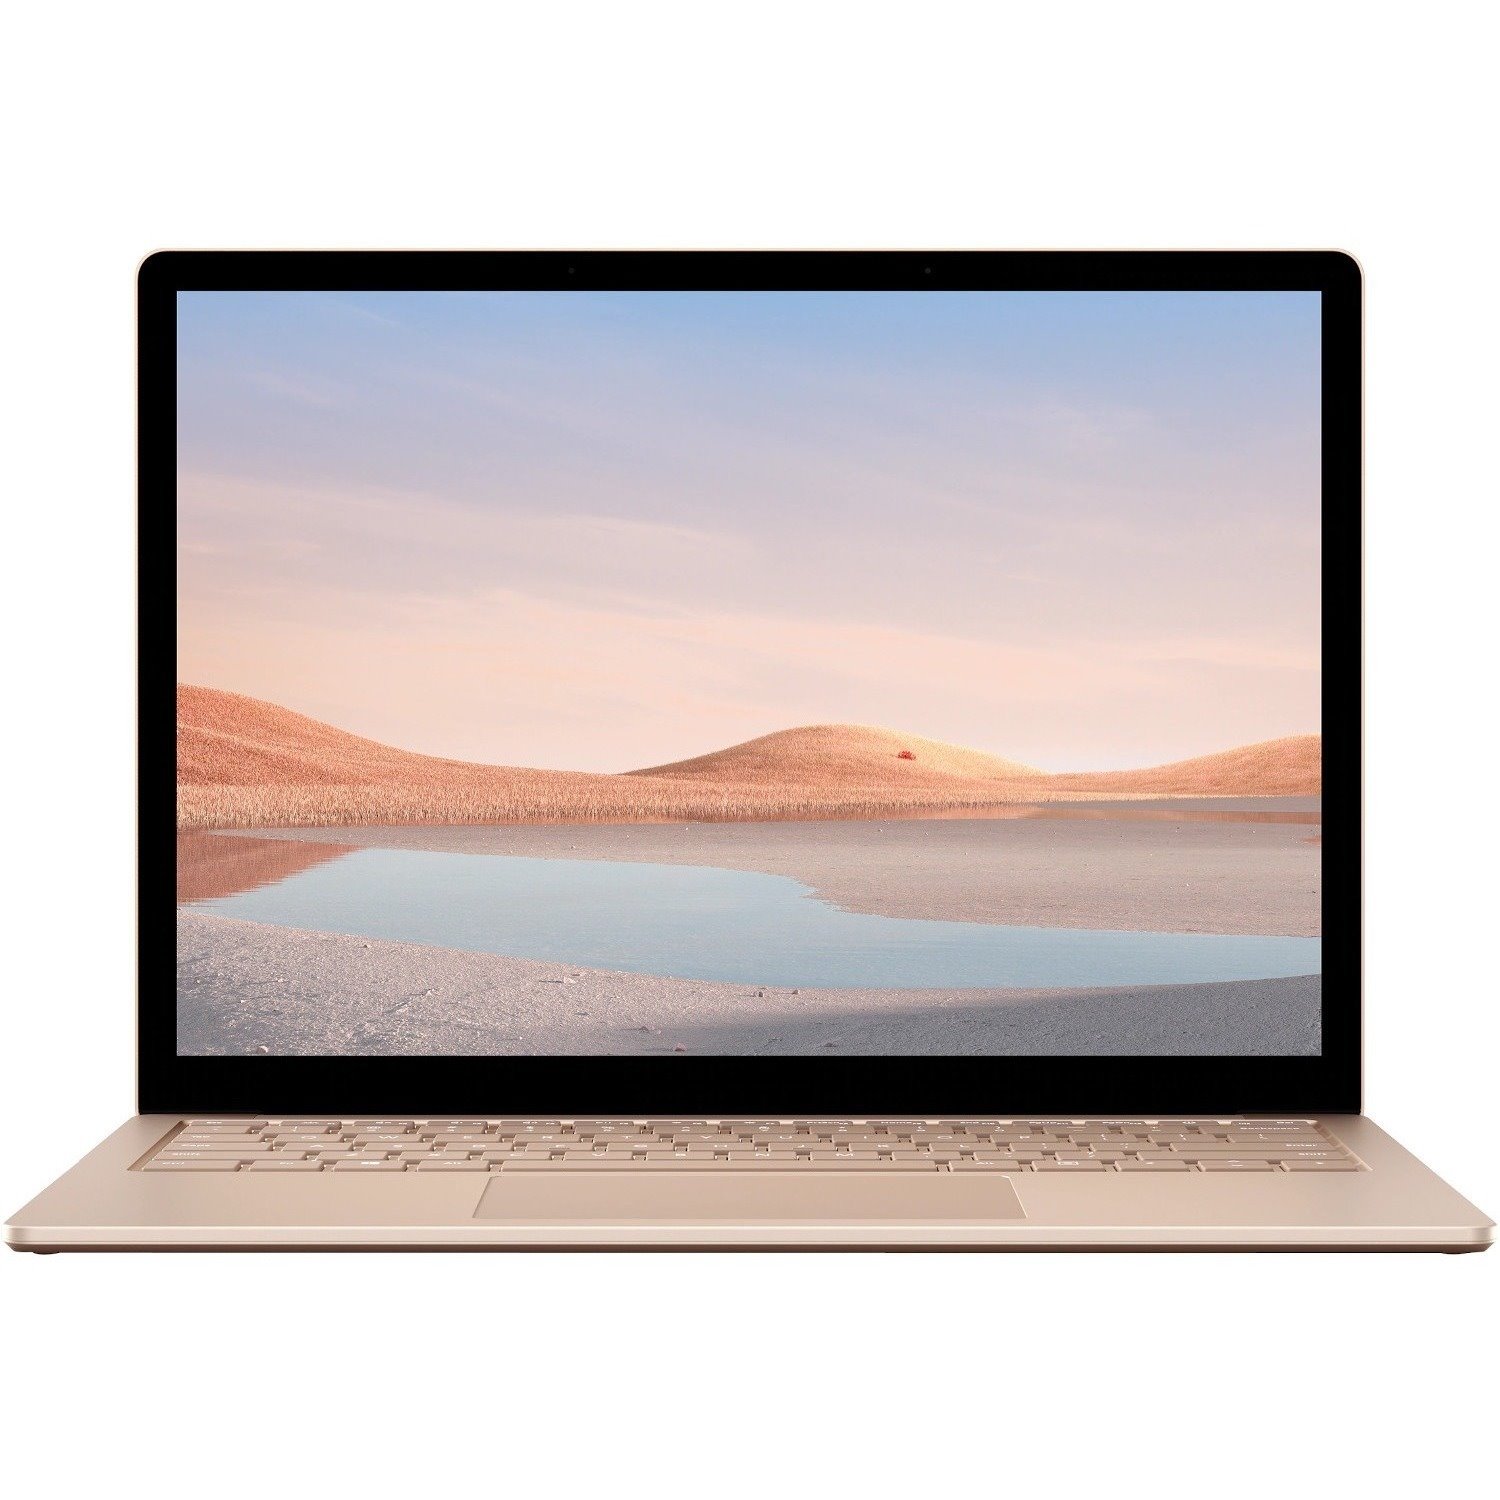 Microsoft Surface Laptop 4 34.3 cm (13.5") Touchscreen Notebook - 2256 x 1504 - Intel Core i5 - 8 GB Total RAM - 512 GB SSD - Sandstone